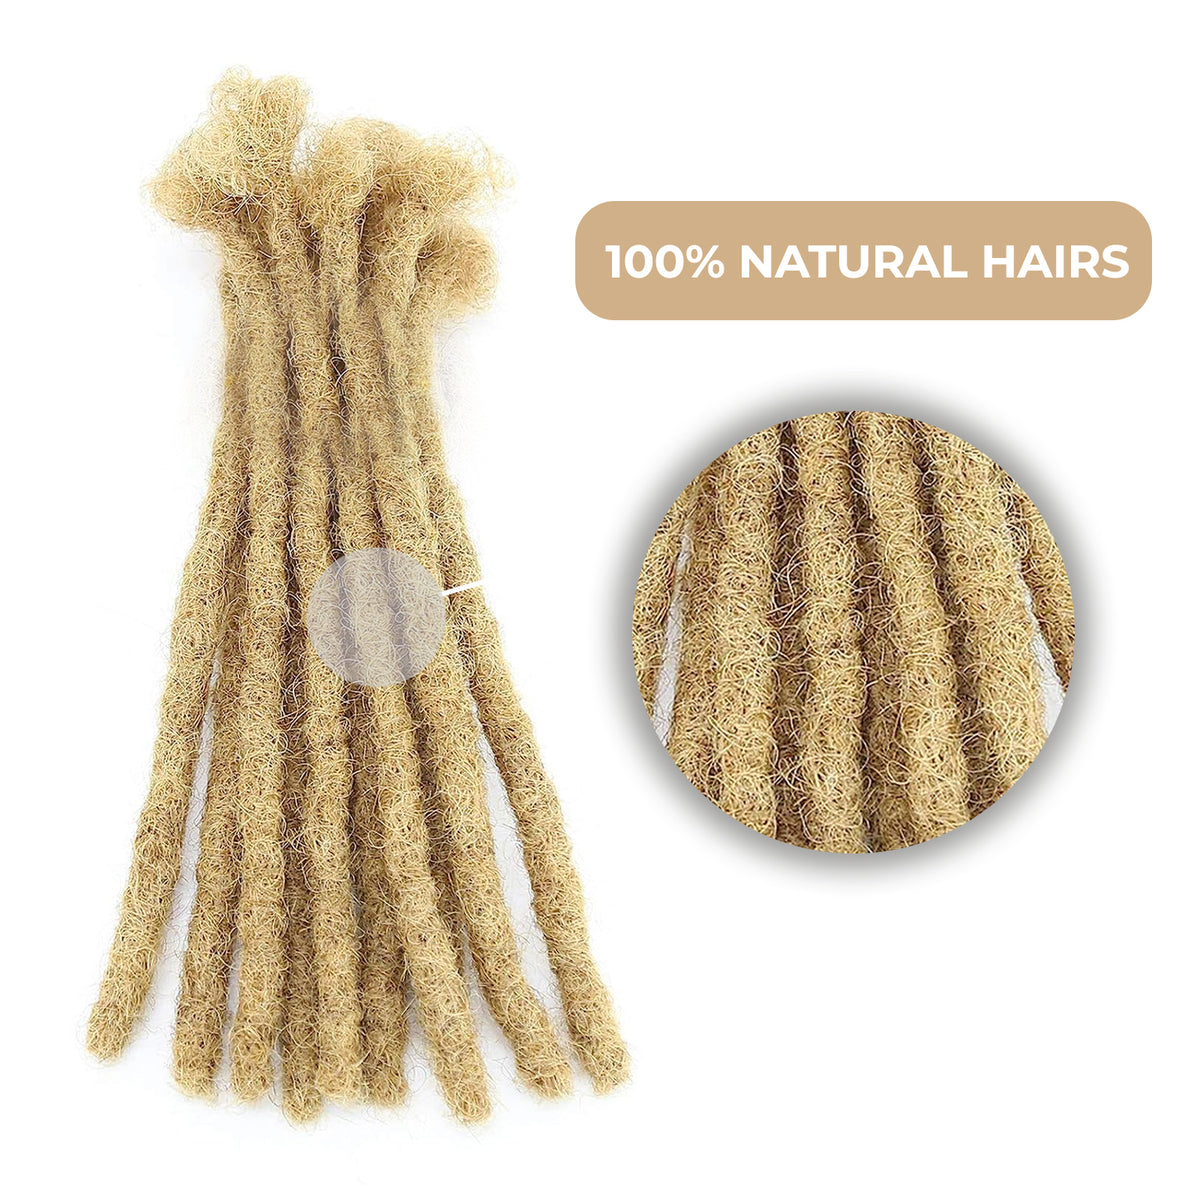 100% Human Hair Blonde Dreadlock Extensions 16Inch 10 Strands Handmade Natural Loc Extensions Human Hair Bundle Dreads Extensions For Woman & Men (27/Honey Blonde 16inch length 0.4cm Width)